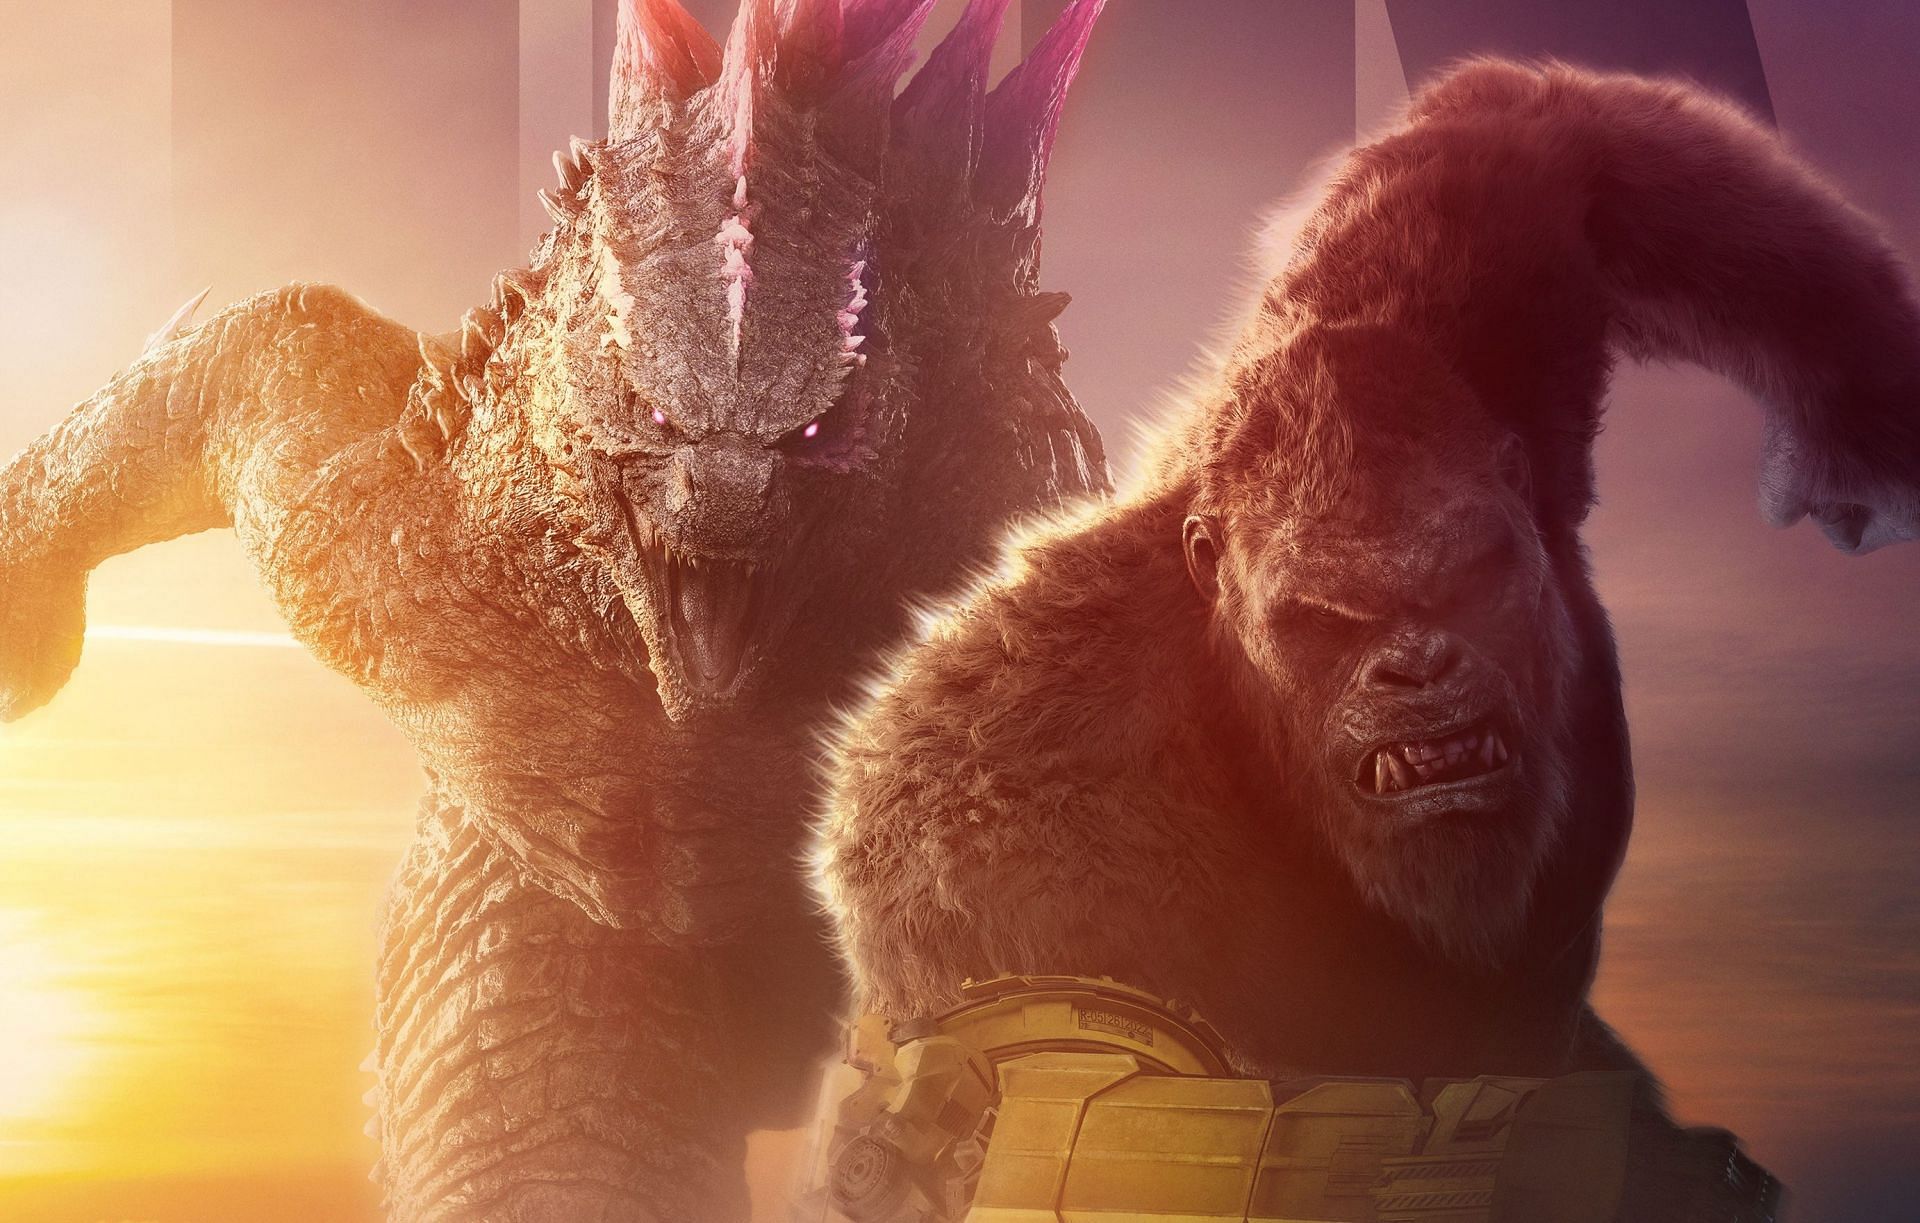 Poster for Godzilla x Kong: The New Empire (Image via @GodzillxKong on X)